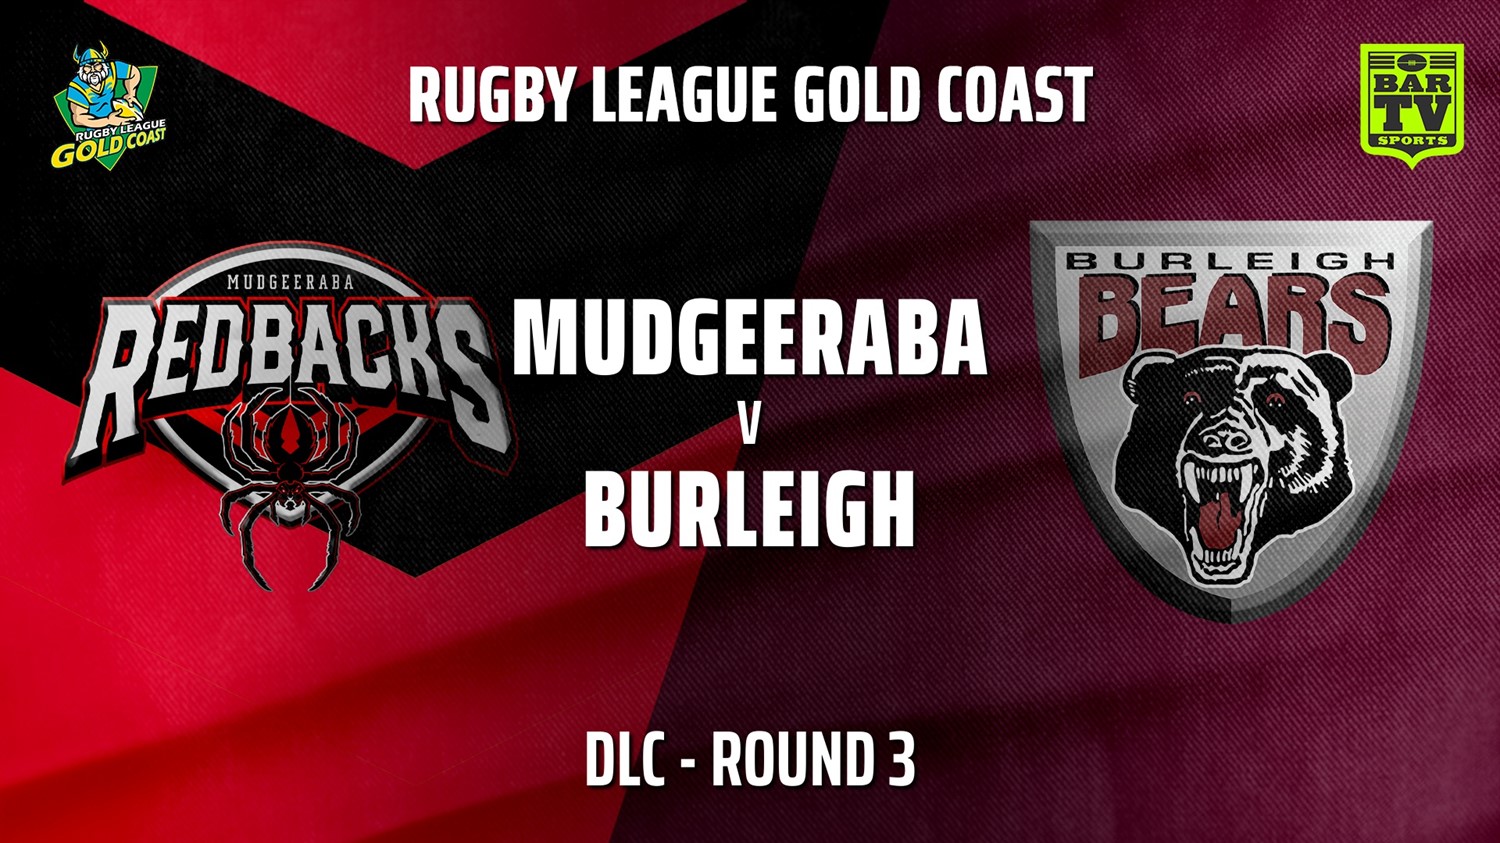 210522-RLGC Round 3 - DLC - Mudgeeraba Redbacks v Burleigh Bears Slate Image